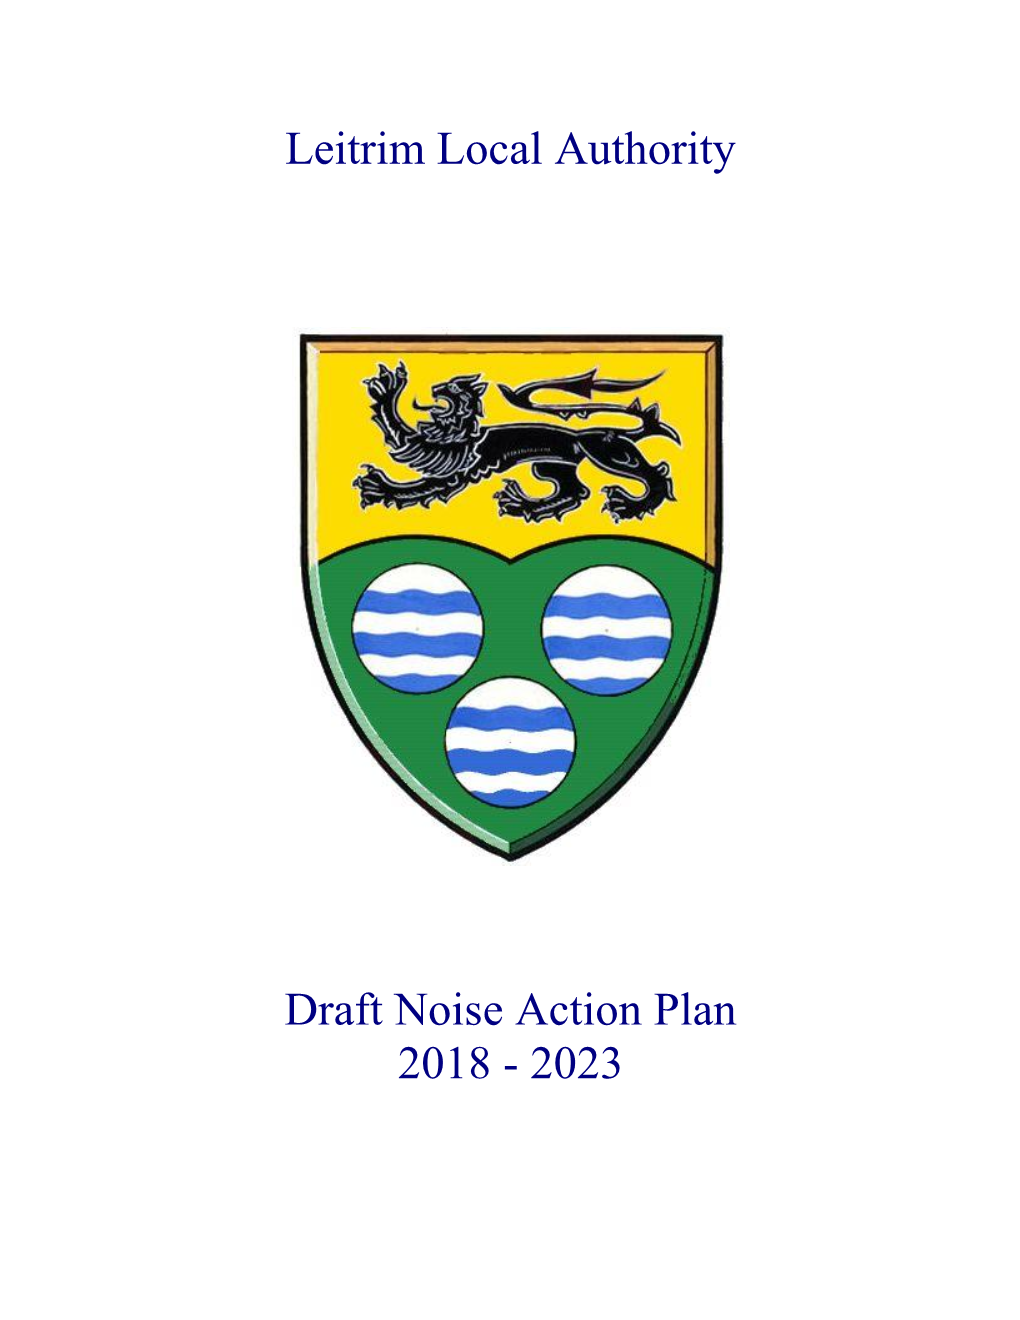 Leitrim Local Authority Draft Noise Action Plan 2018